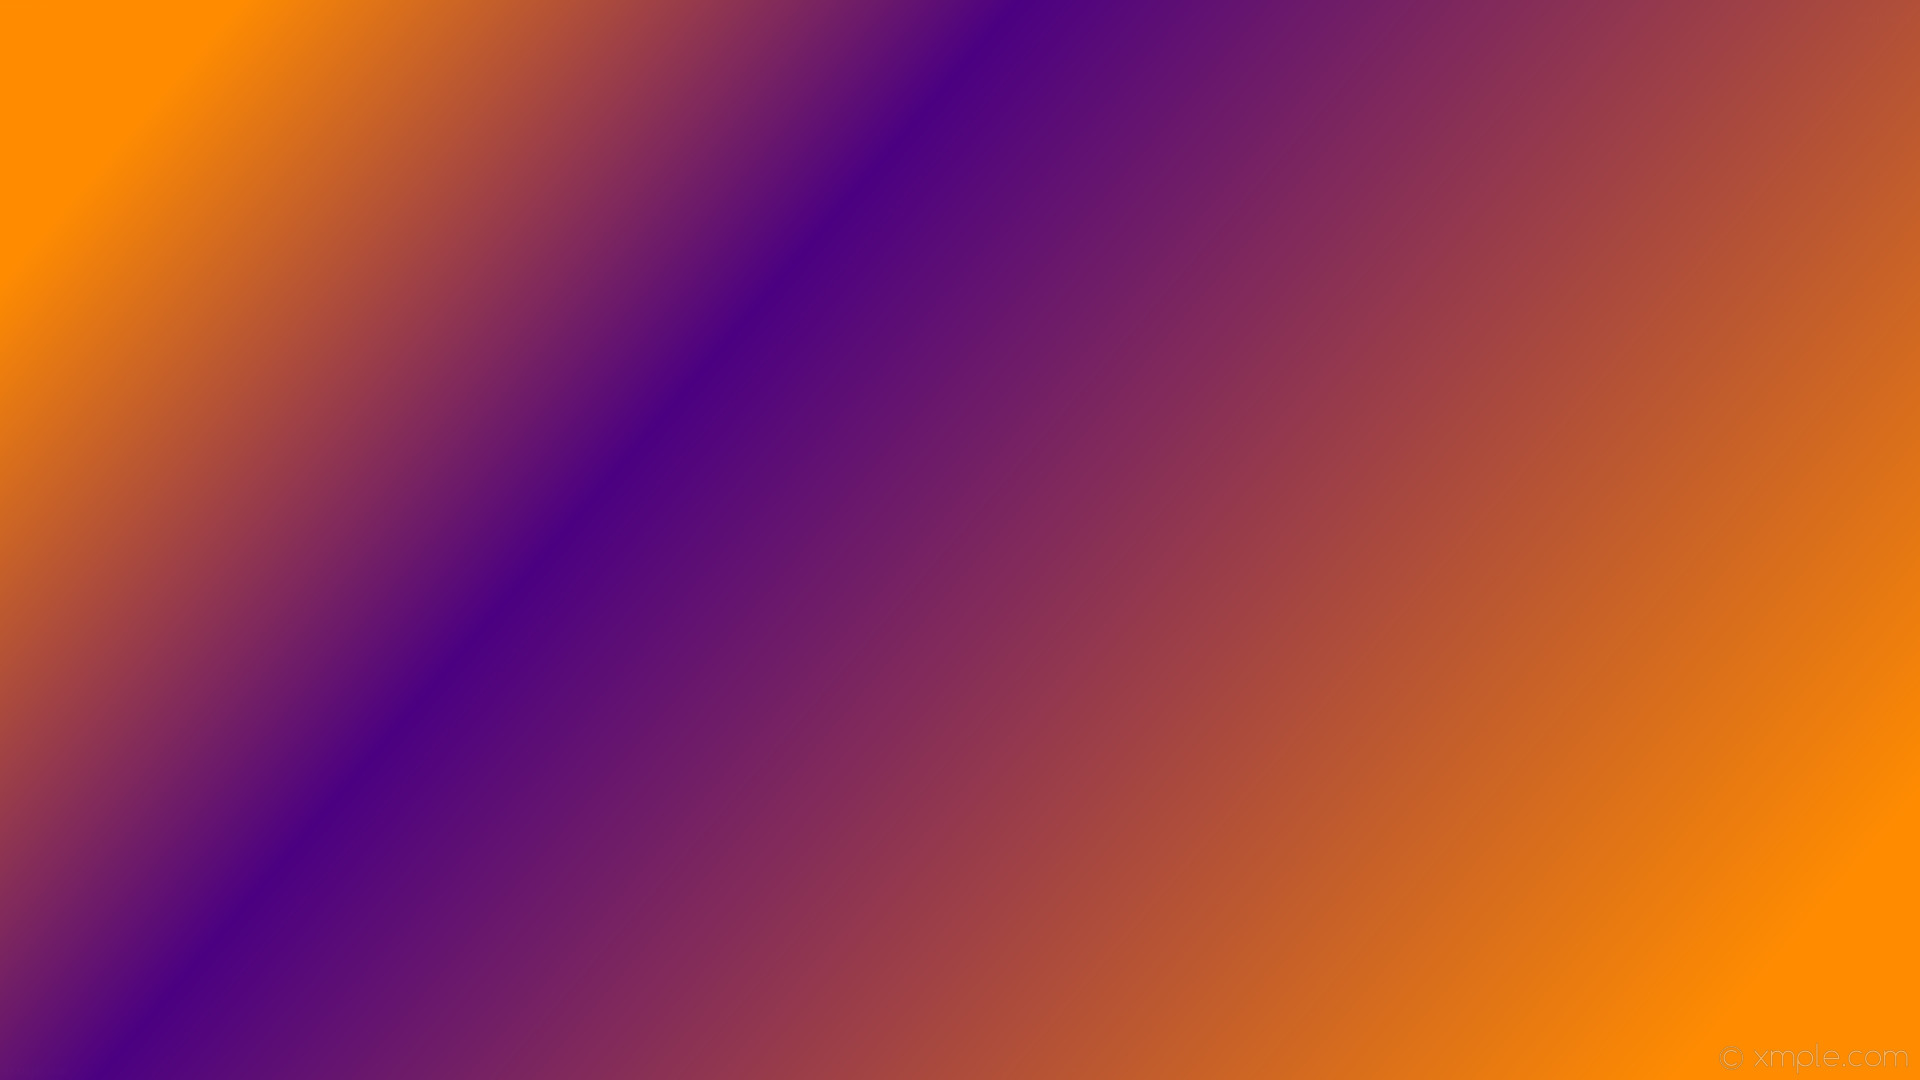 1920x1080 wallpaper highlight linear gradient purple orange dark orange indigo  #ff8c00 #4b0082 165Â° 33